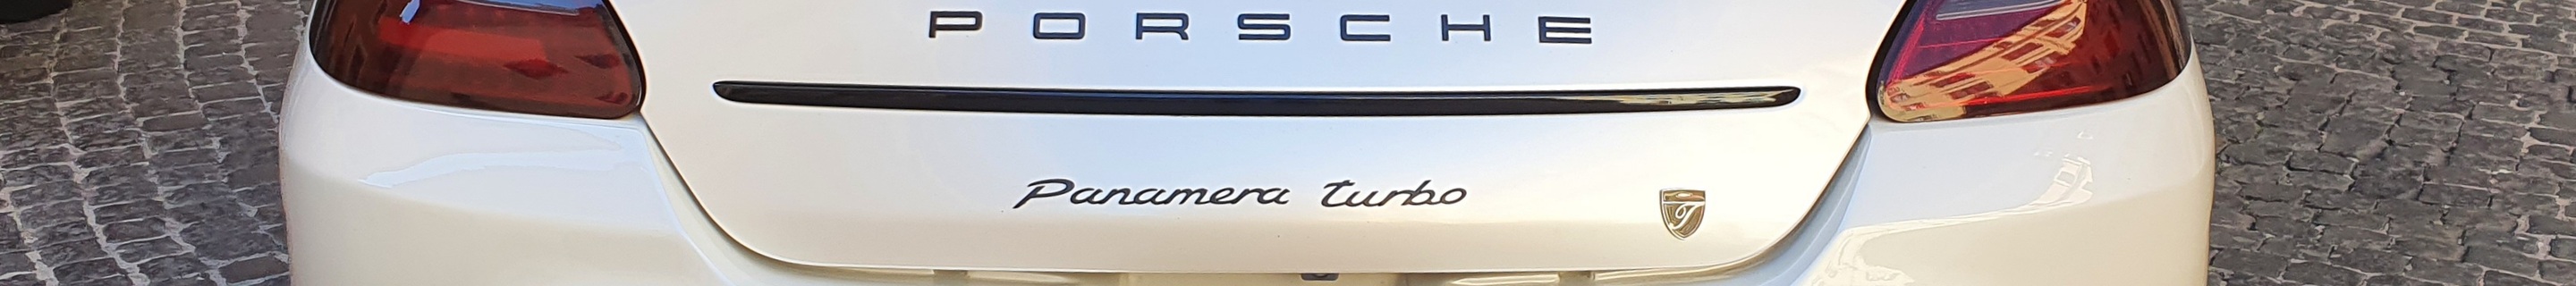 Porsche Mansory Panamera C One